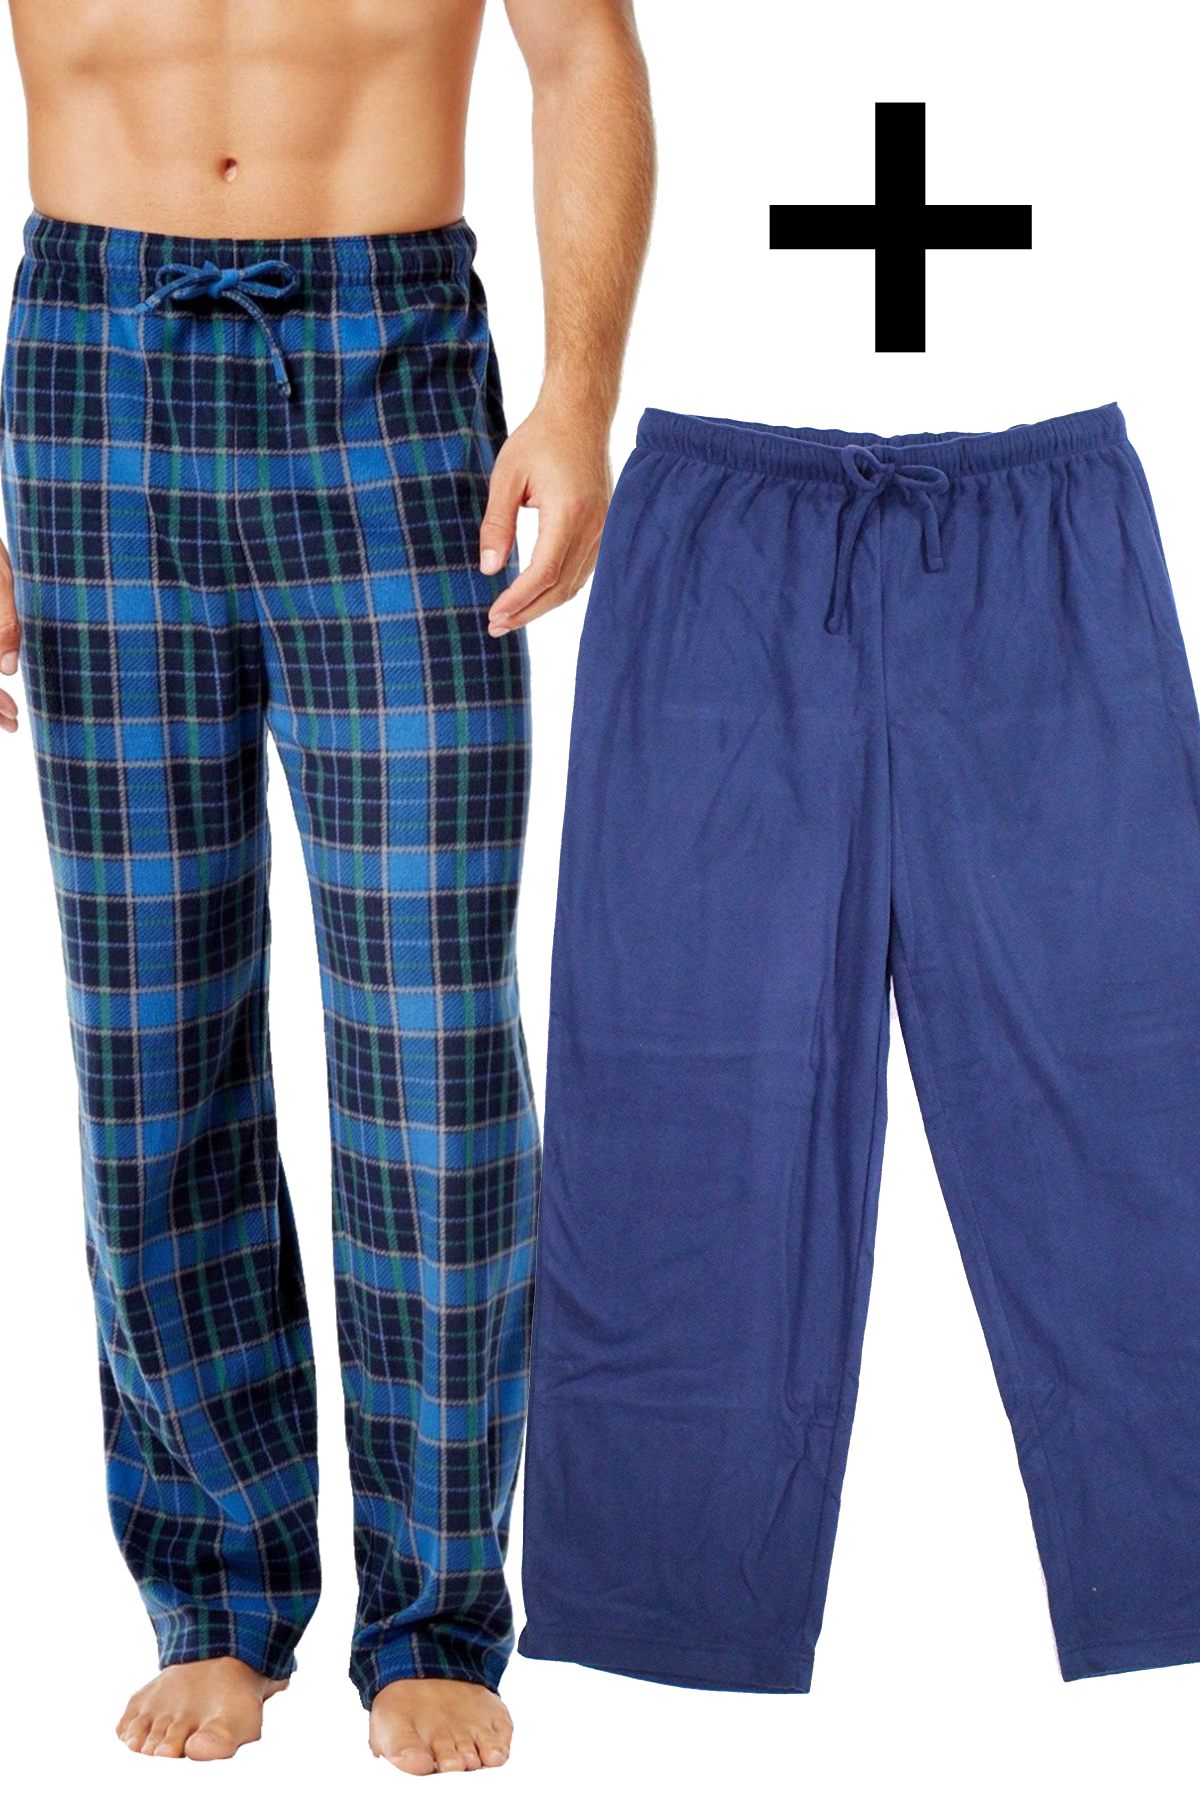 Club Room Green-Plaid/Solid-Navy Fleece Pajama Pant 2-Pack